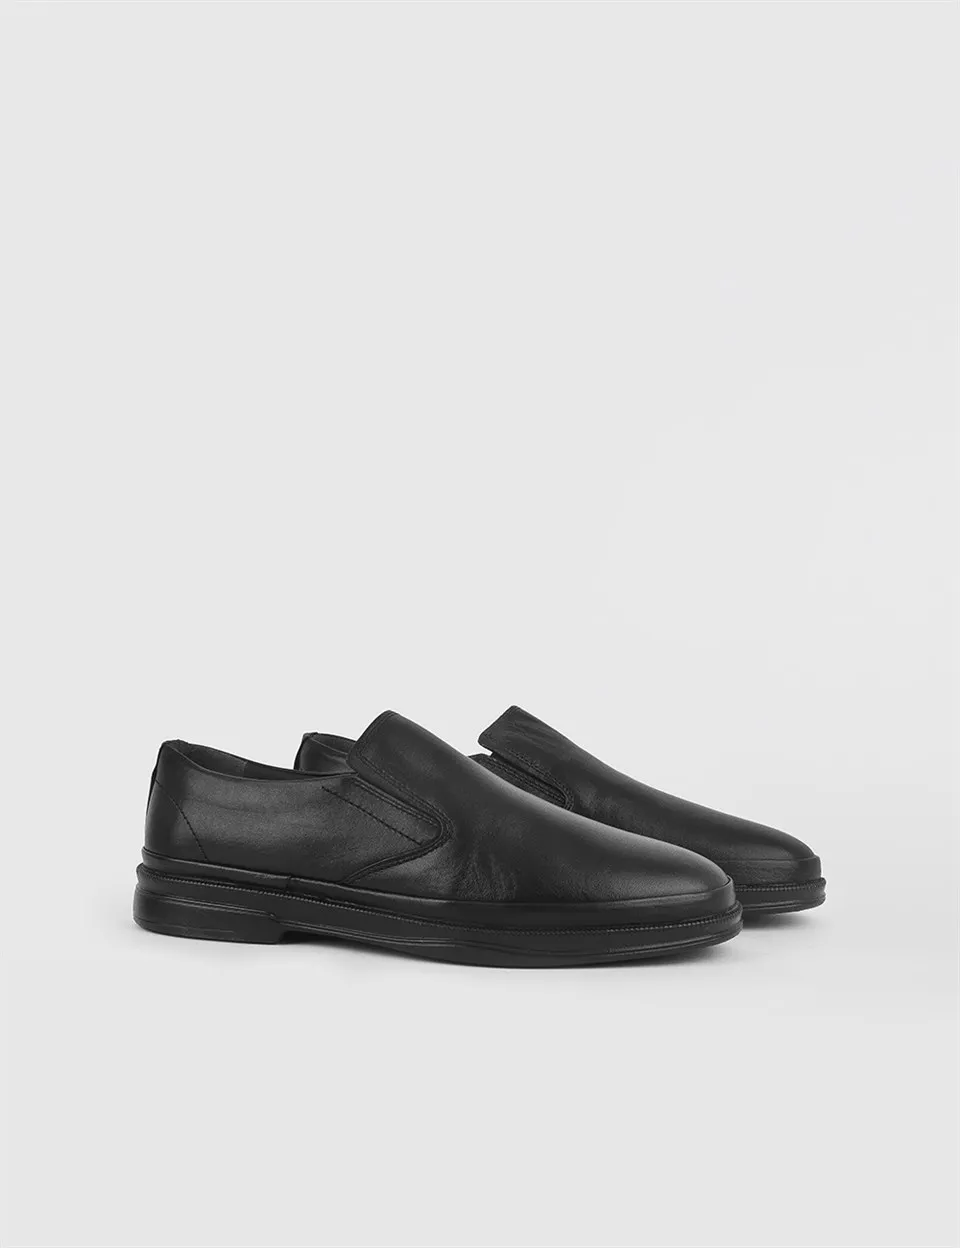 

ILVi-Genuine Leather Handmade Marcelo Black Nappa Leather Men's Loafer Men Shoes 2021 Fall/Winter